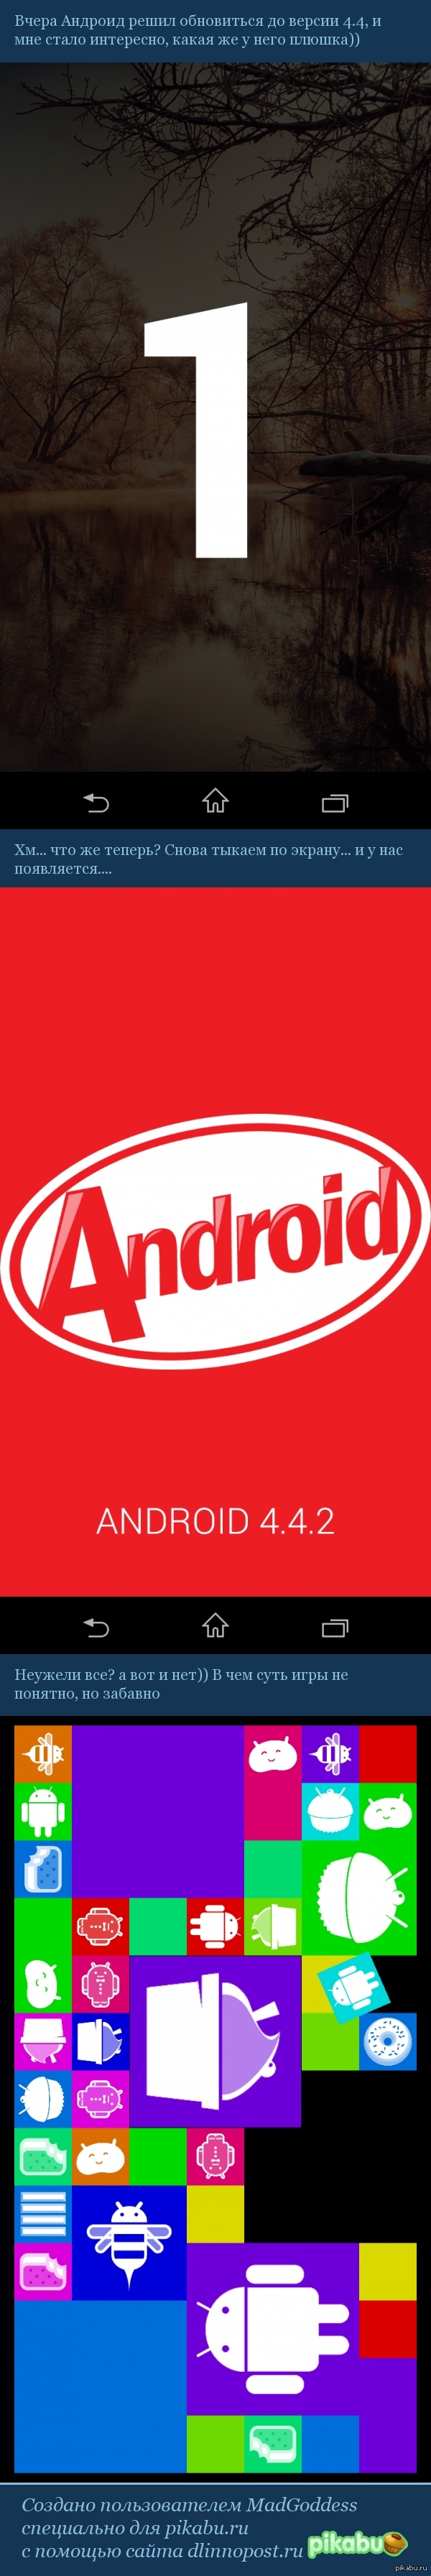 Android KitKat  4.4